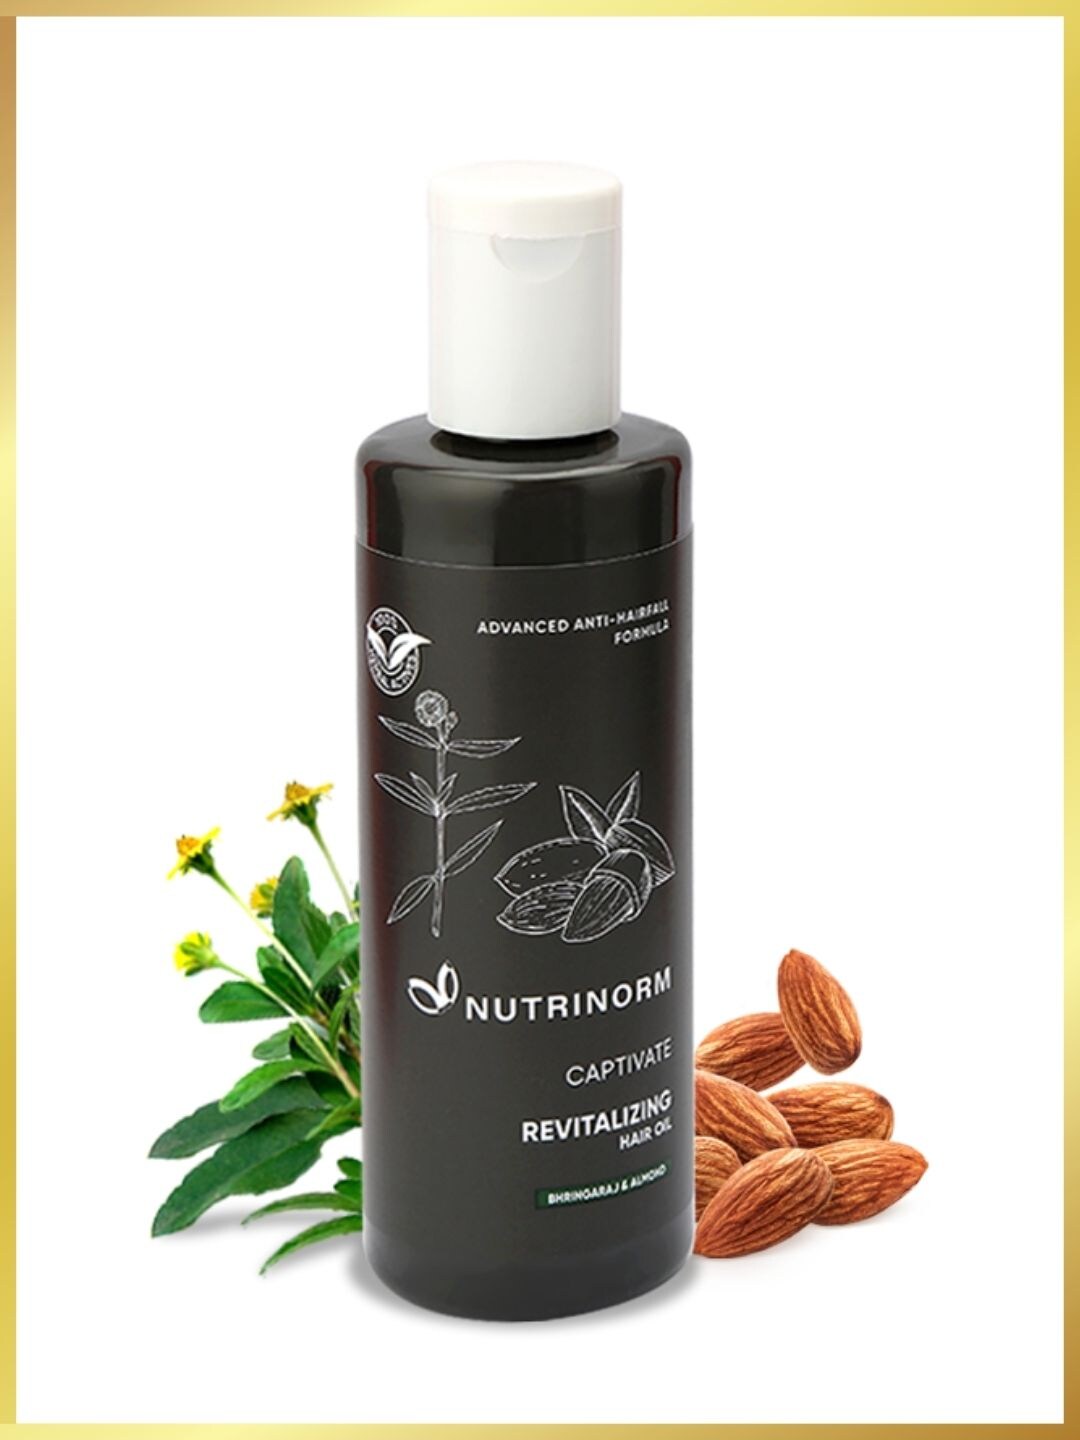 Nutrinorm Wellness Nutrinorm Revitalizing Hair Oil 100 ml Price in India